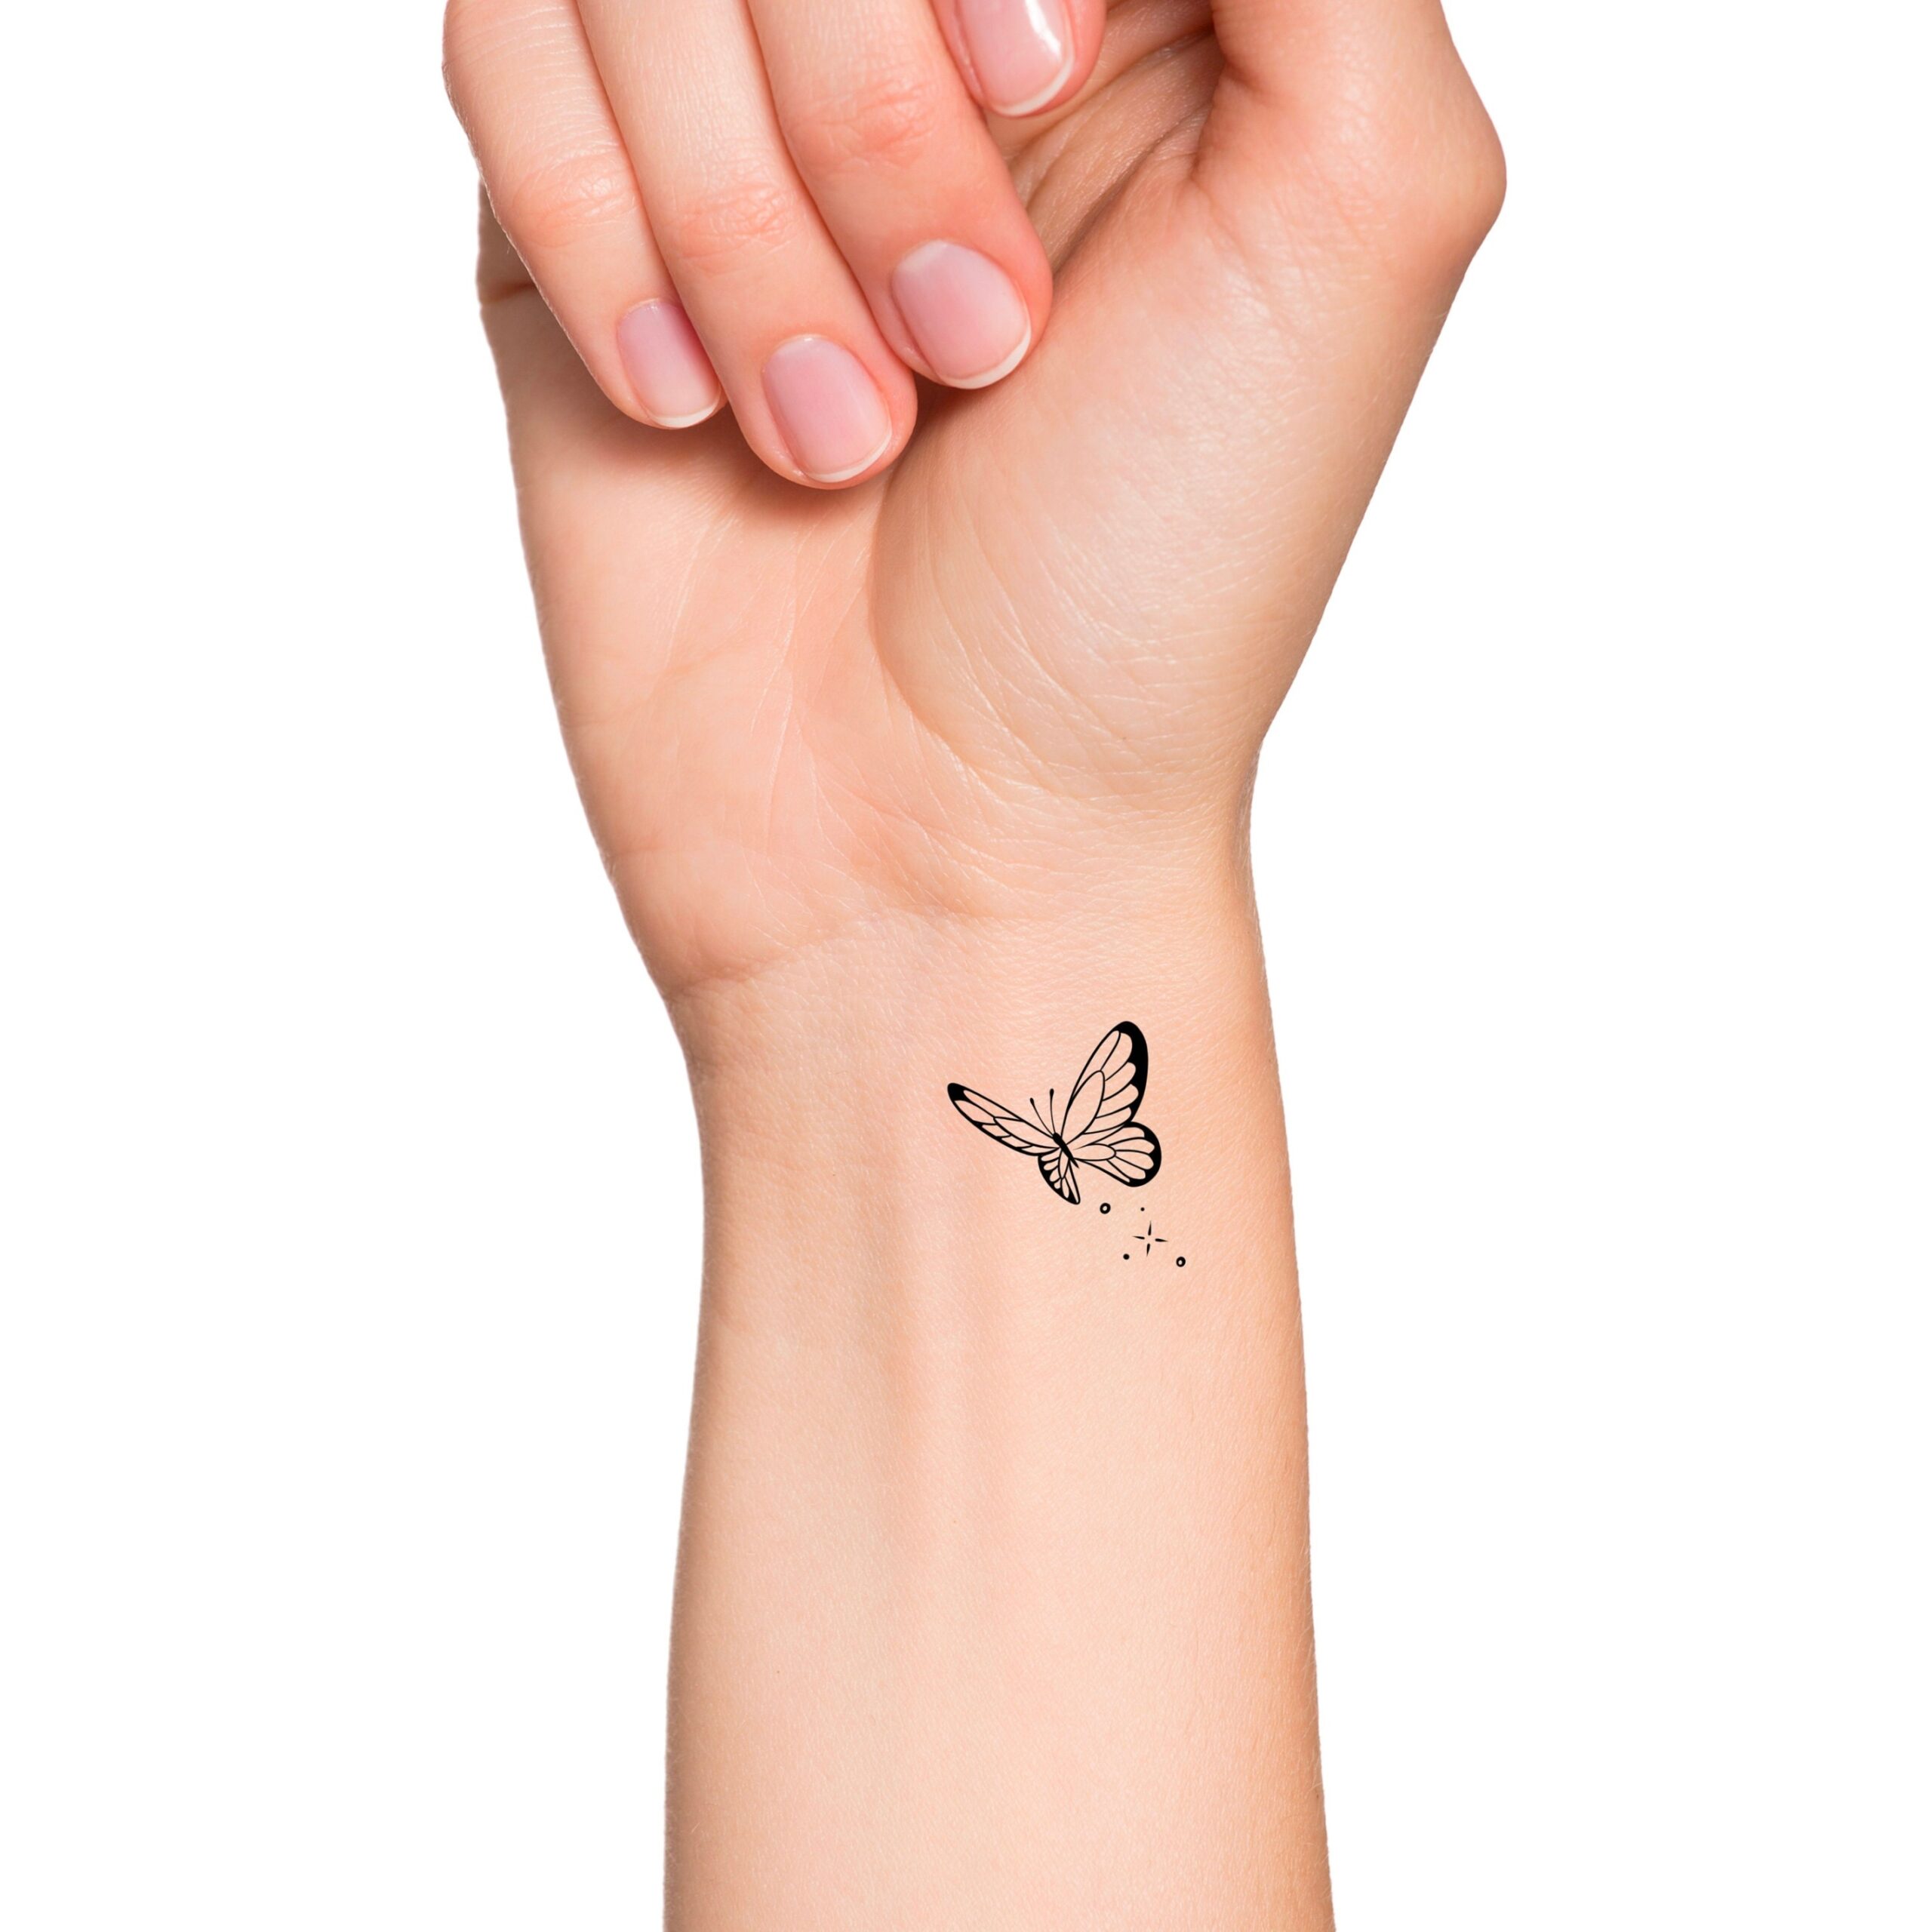 butterfly tattoos on wrist designs Bulan 4 Small Butterfly Temporary Tattoo / Wrist Tattoo - Etsy